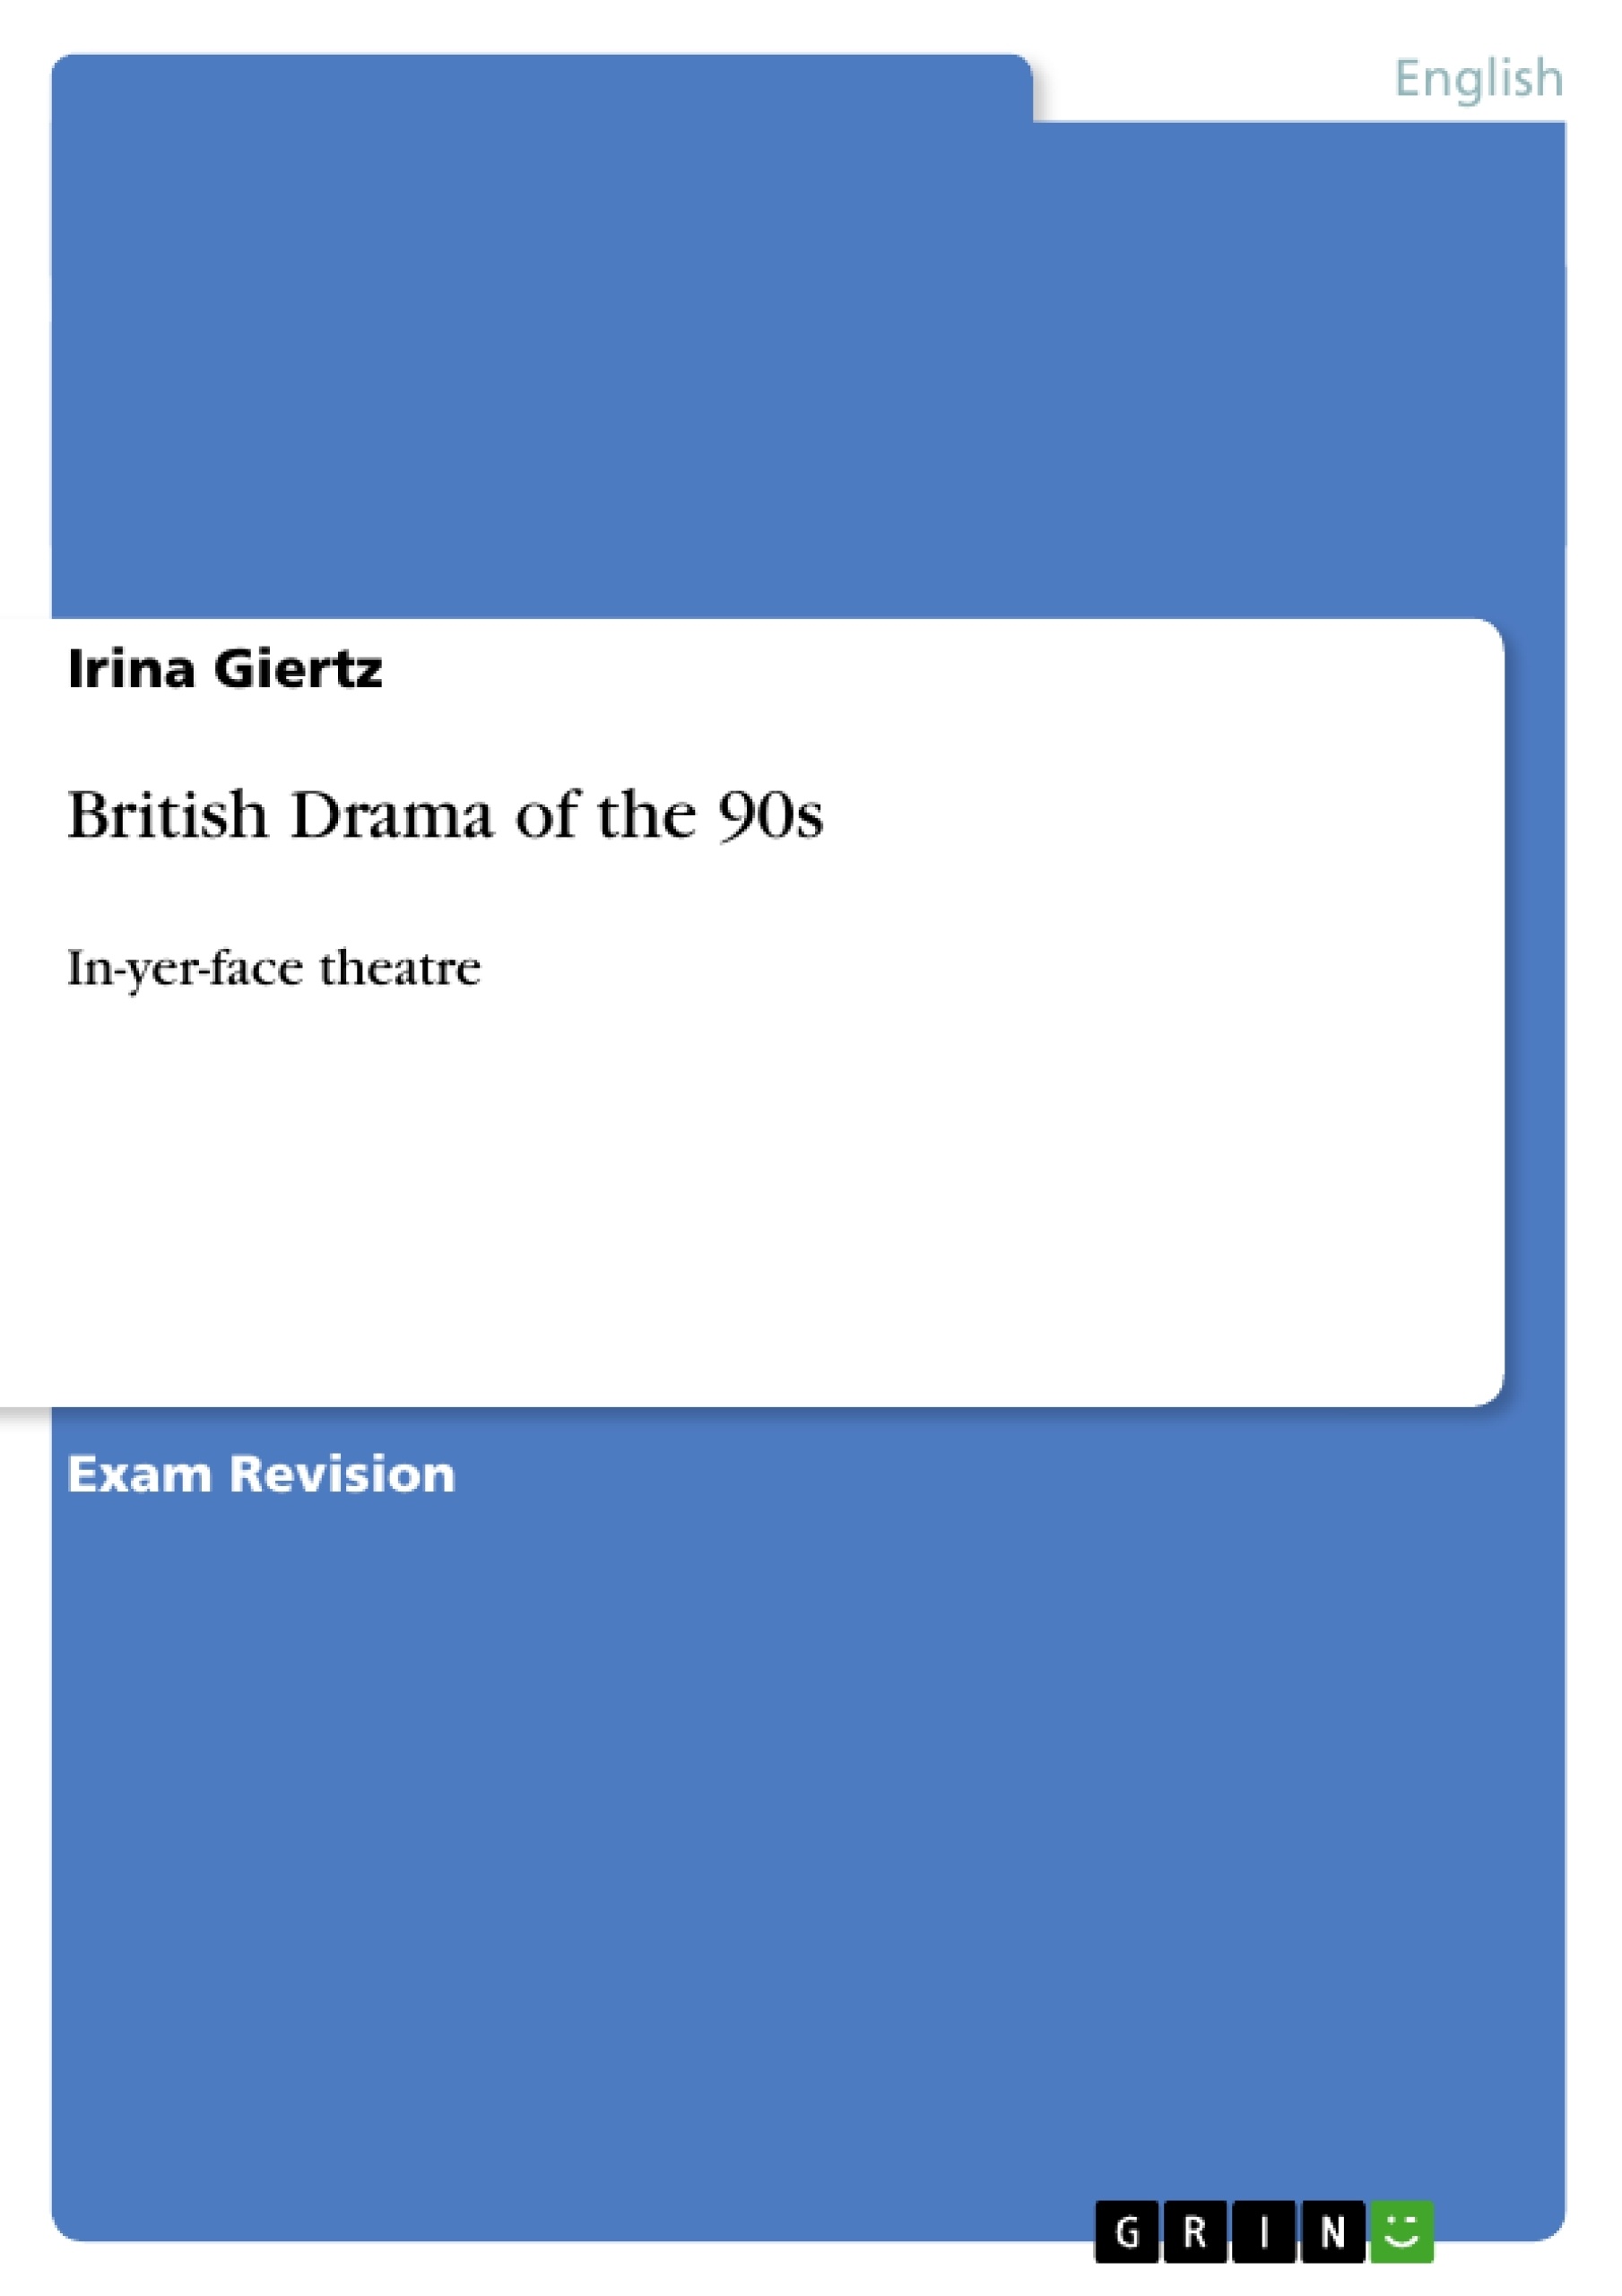 Título: British Drama of the 90s